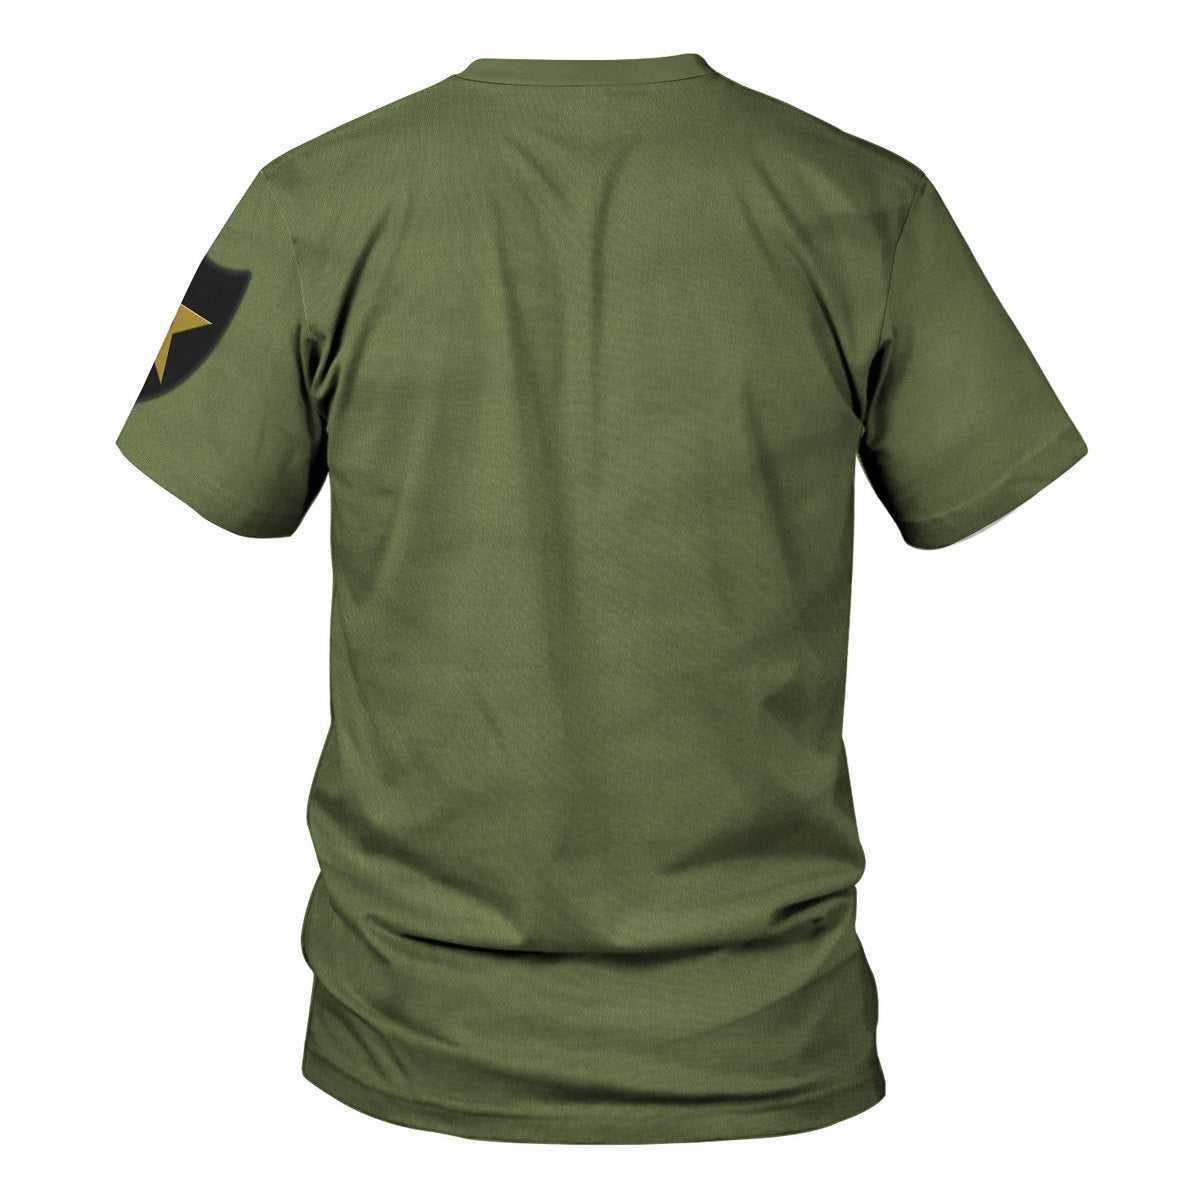 American Jungle Tunic and trousers-3rd pattern-Poplin Rip Stop-Basic T-shirt